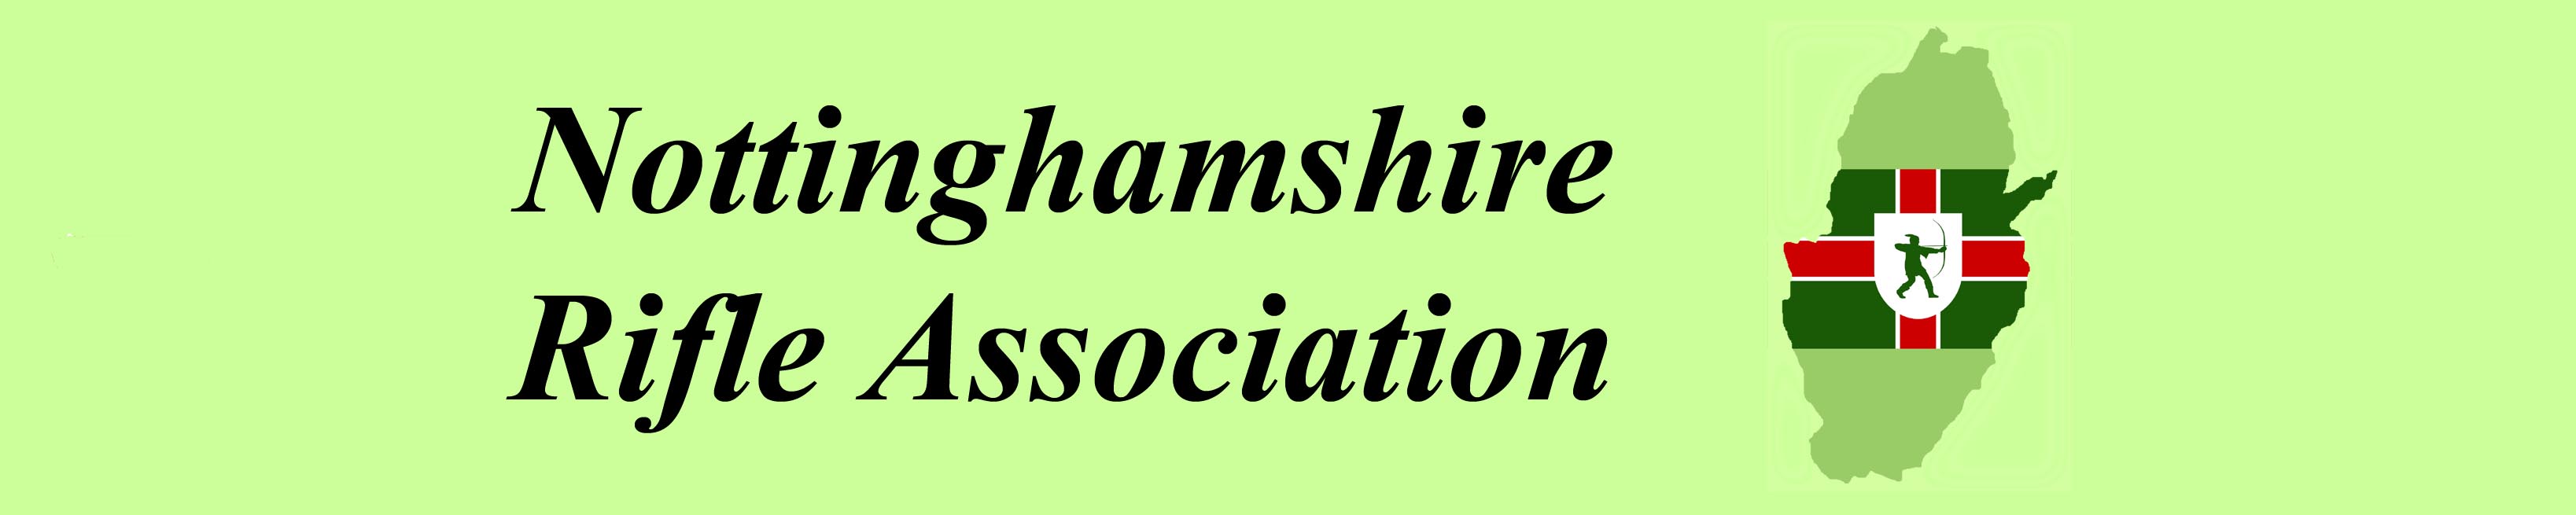 Nottinghamshire Rifle Association